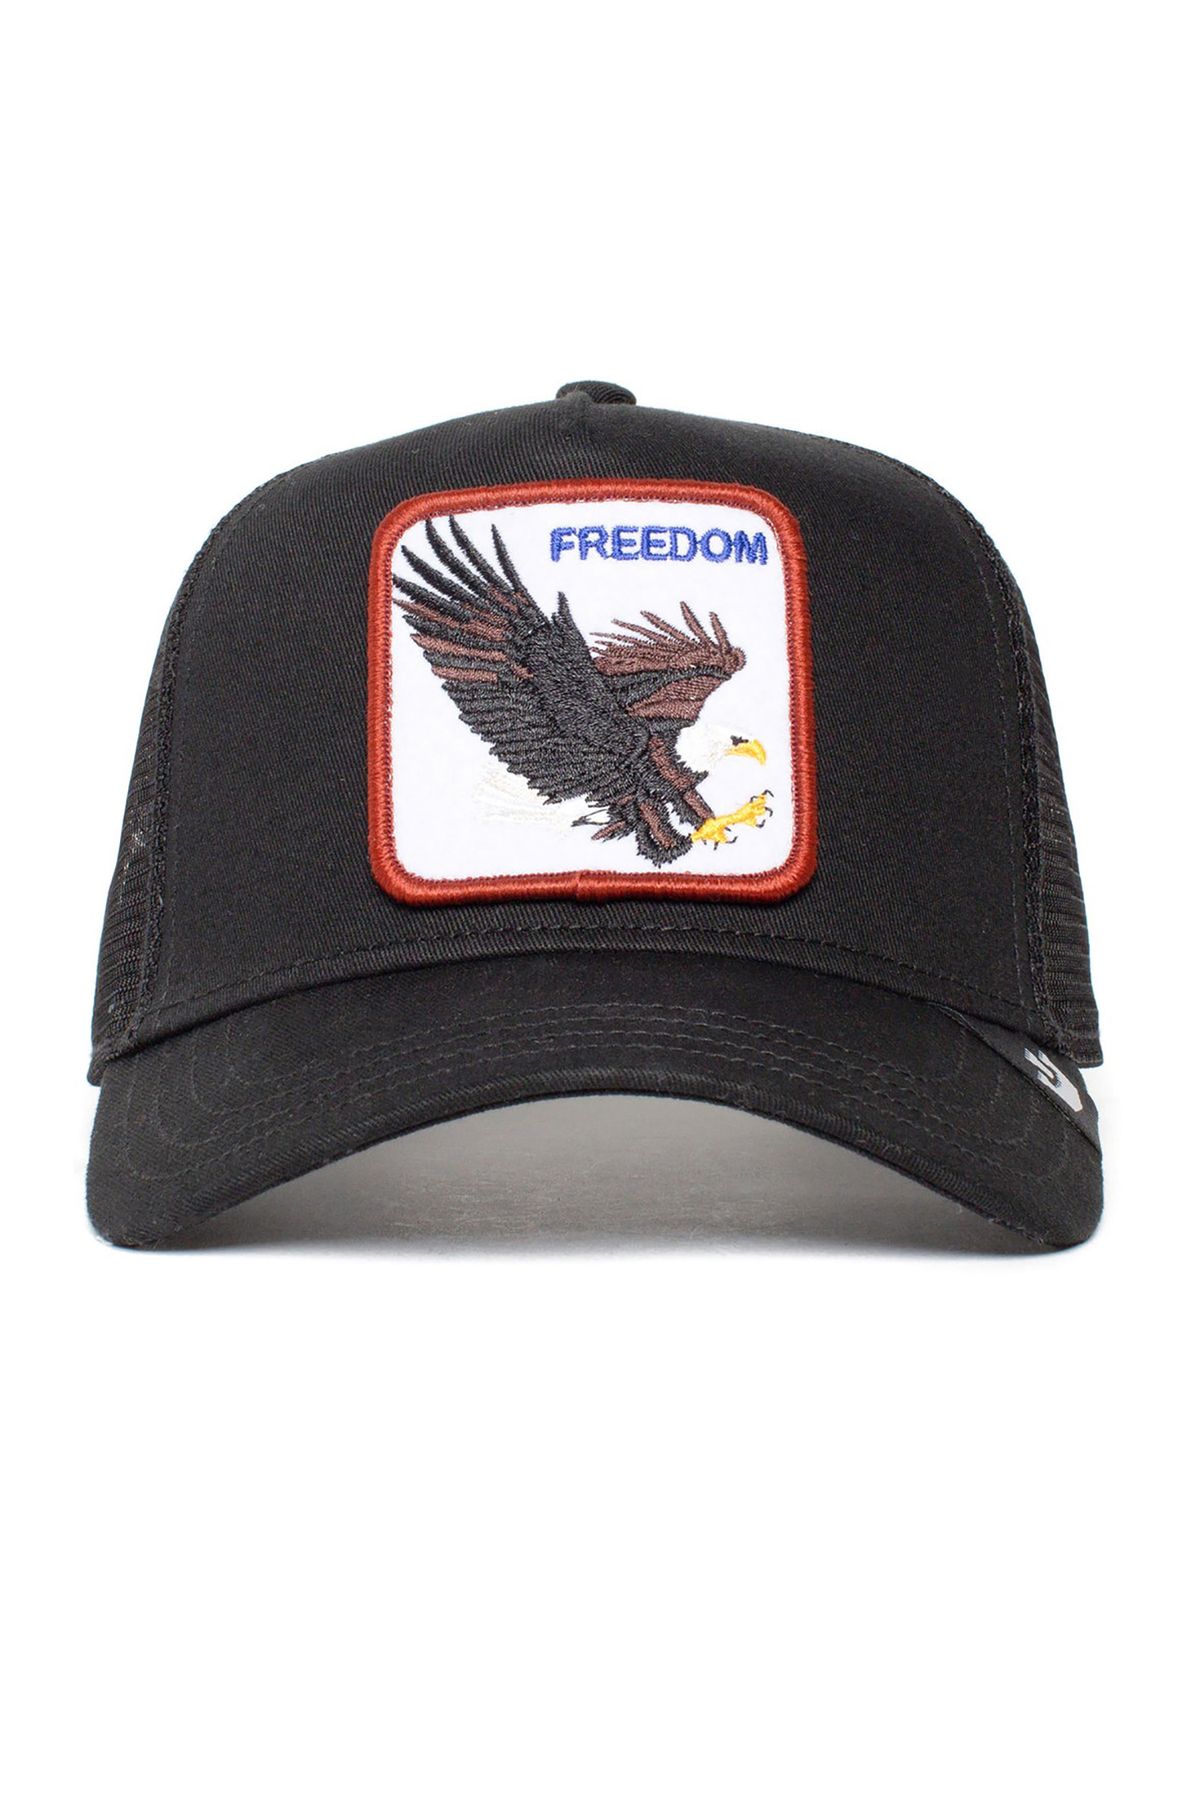 Goorin Bros Bros The Freedom Eagle Siyah Şapka (101-0384-BLK)